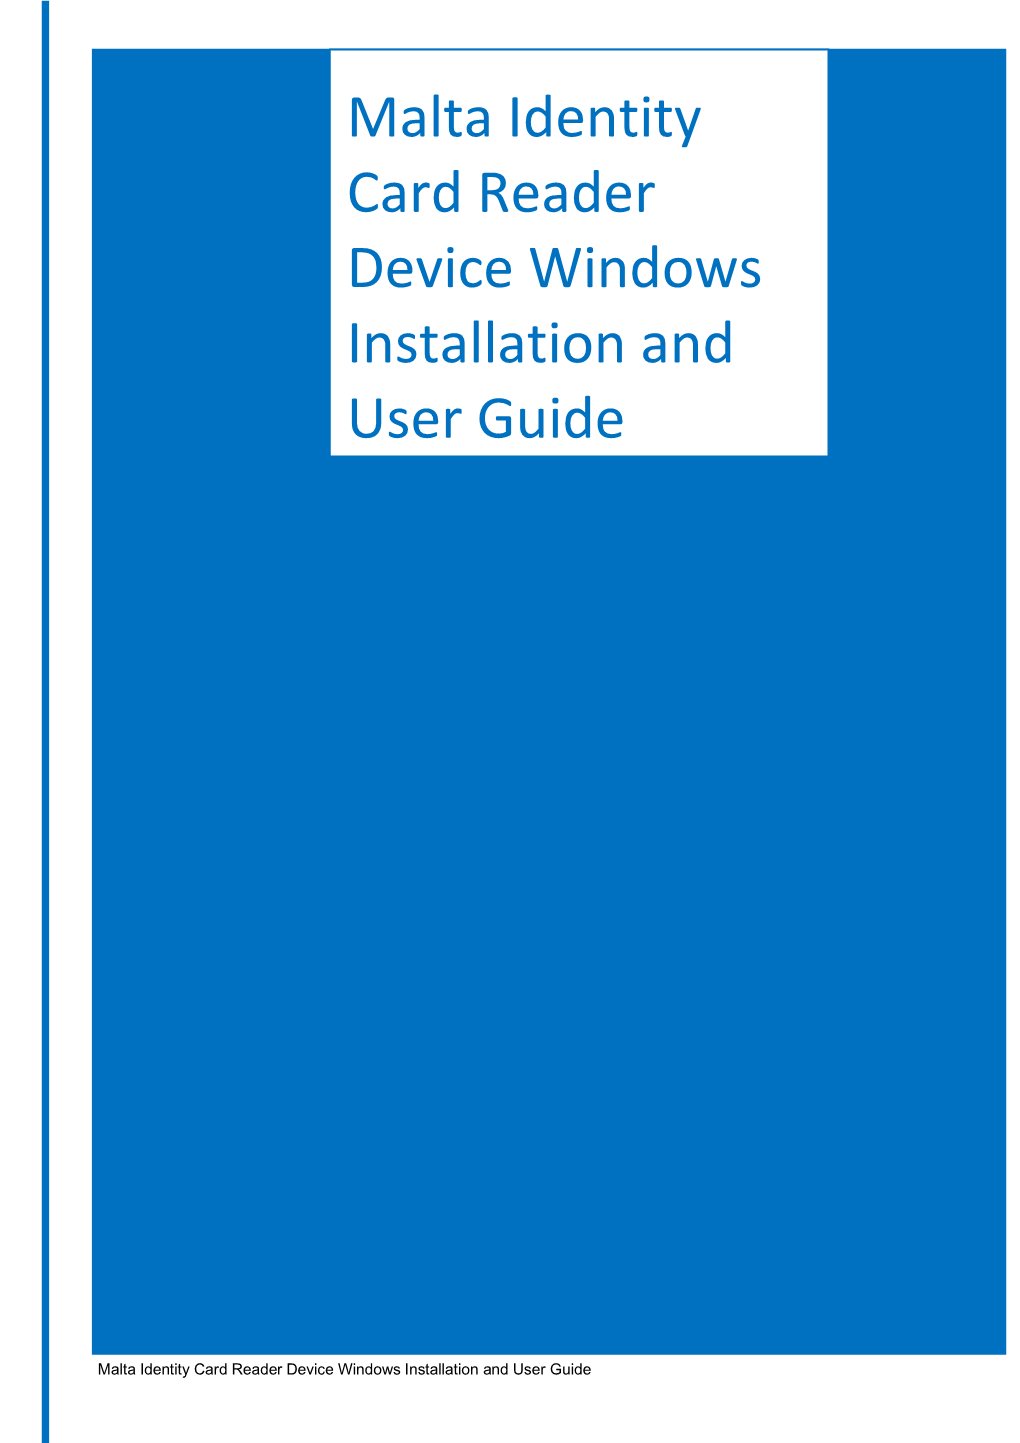 Malta Identity Card Reader Device Windows Installation and User Guide